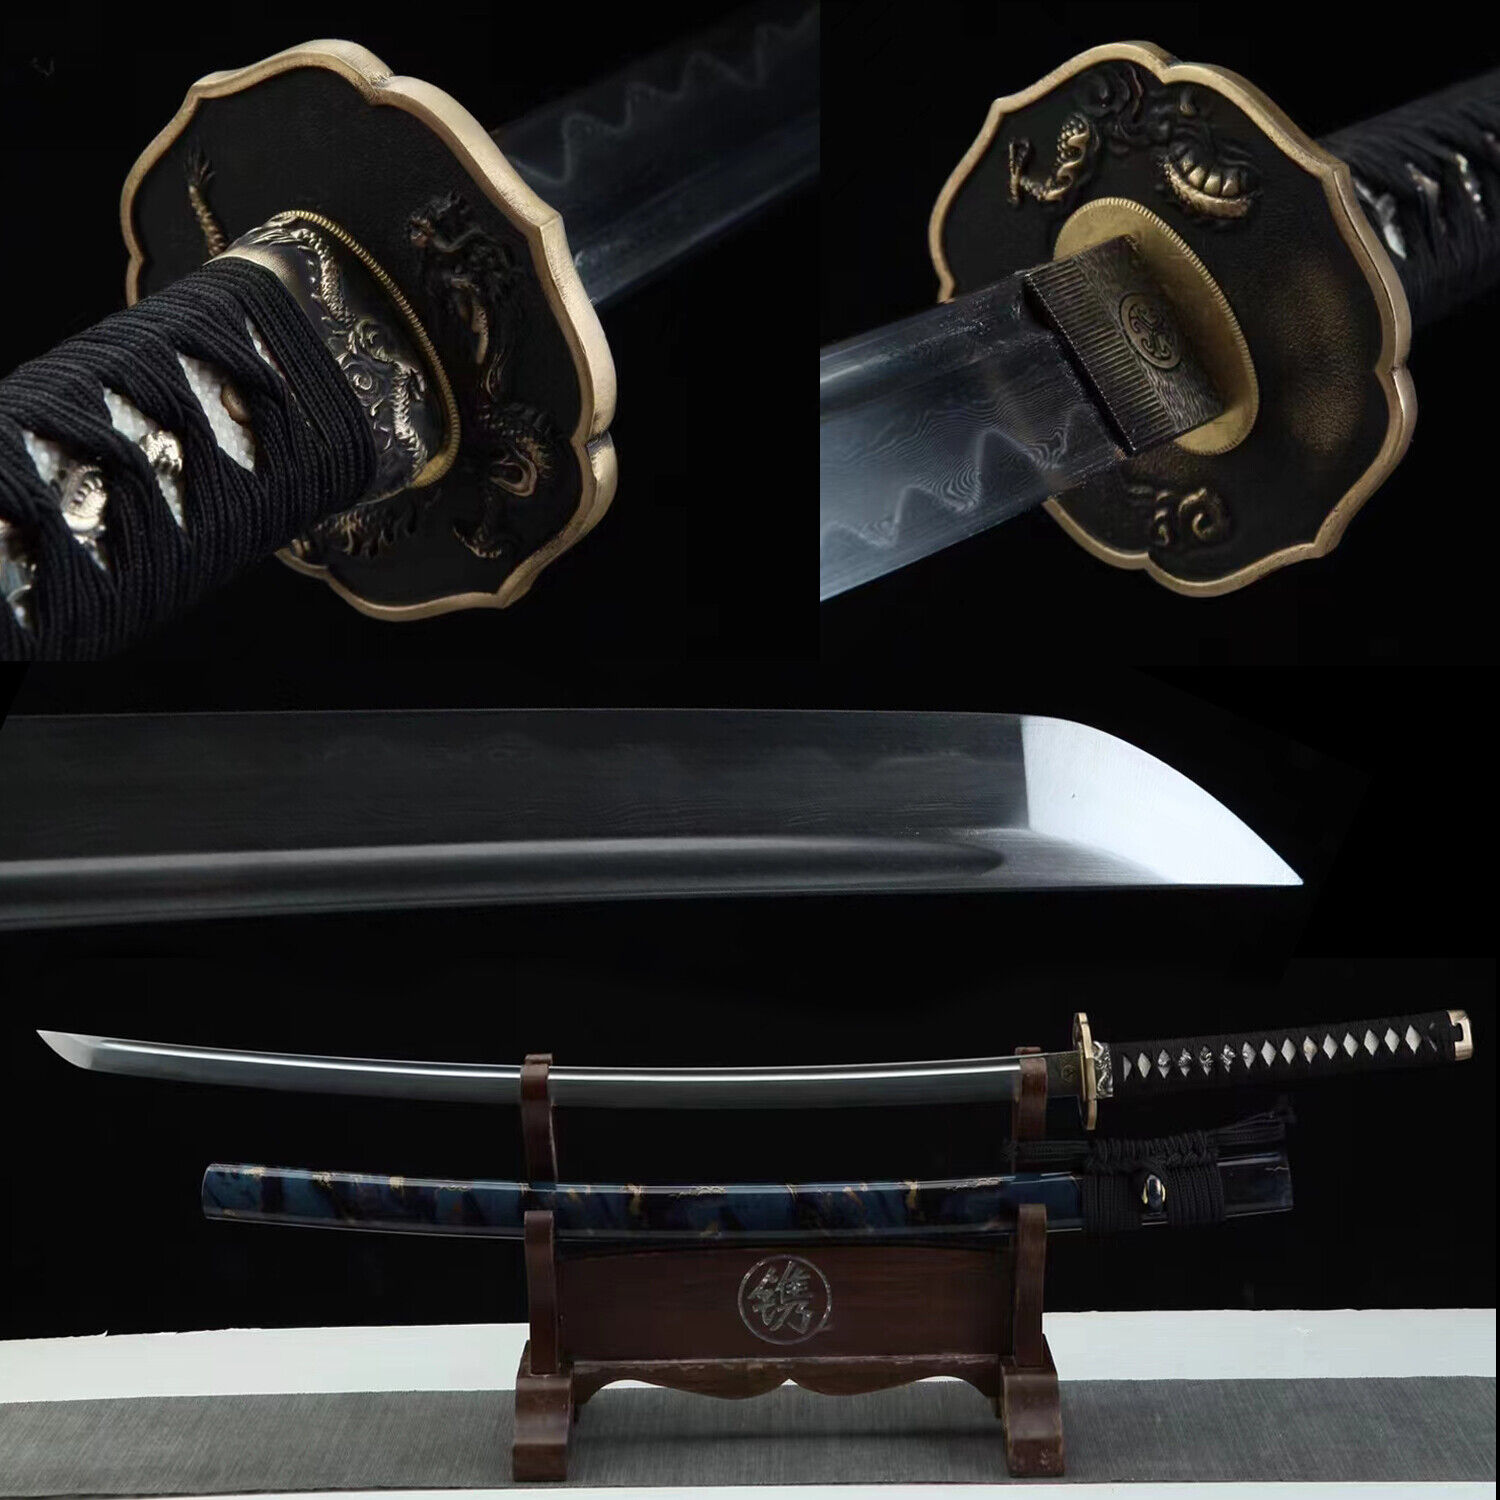 Clay Temperped Folded Steel Japanese Samurai Sword Katana BrassTsuba Razor Sharp